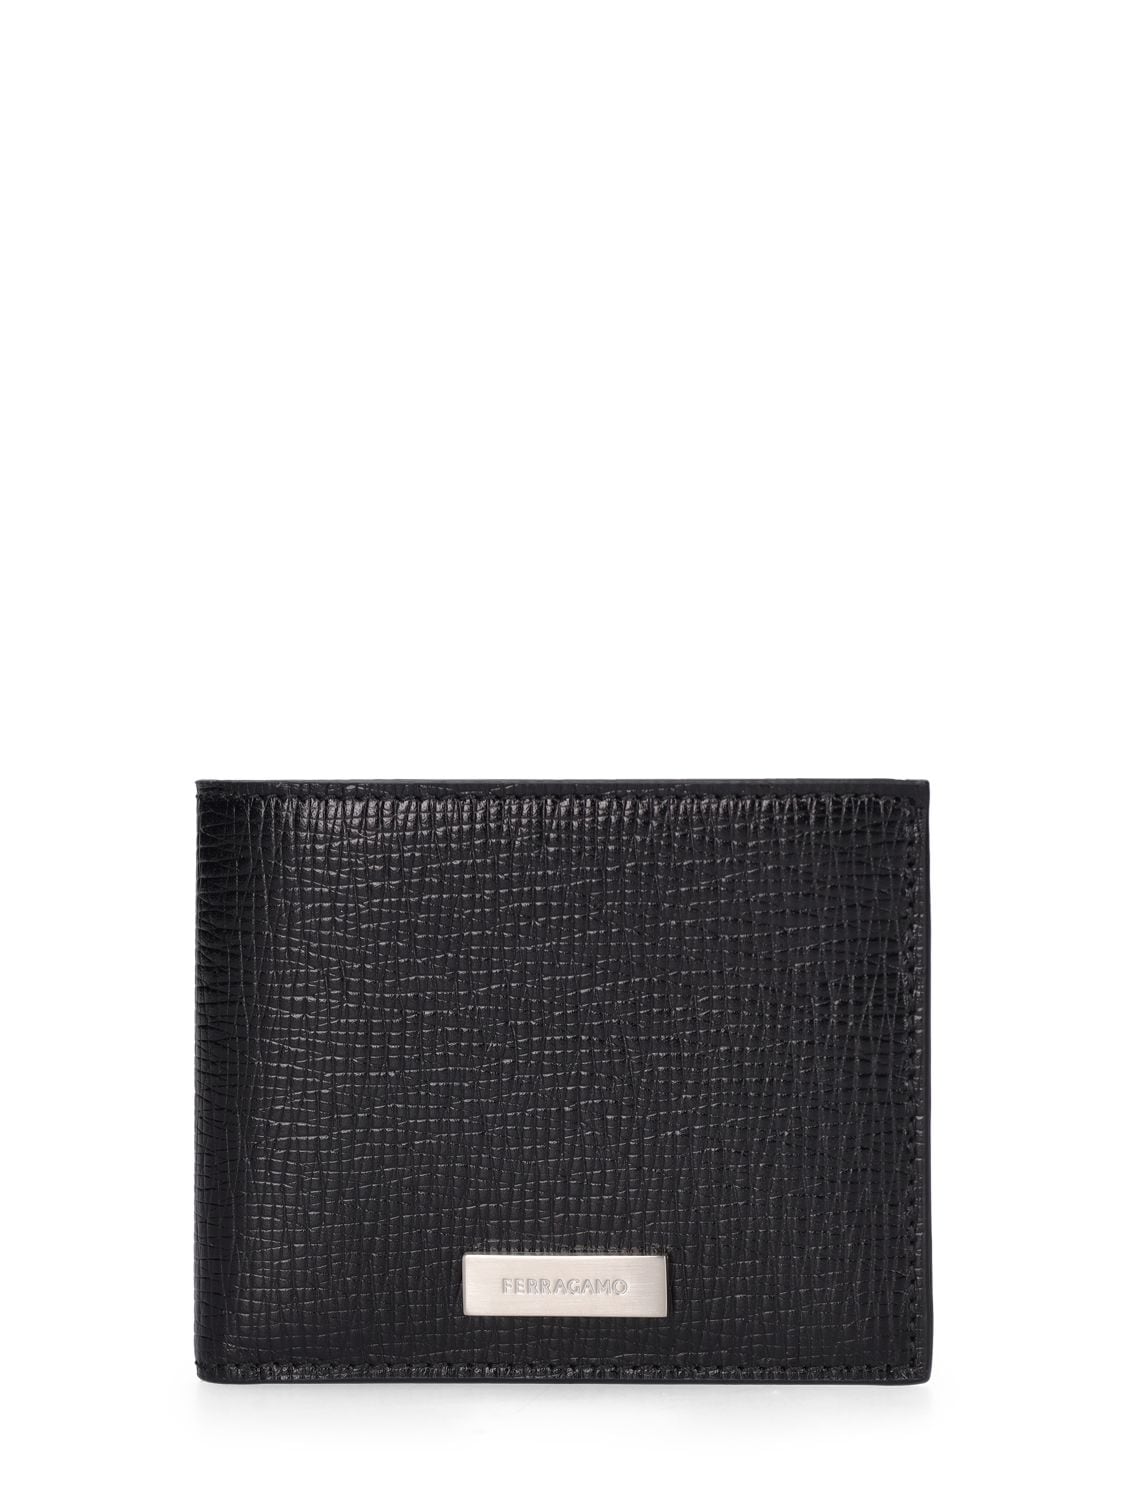 Ferragamo New Revival Leather Bifold Wallet In Black